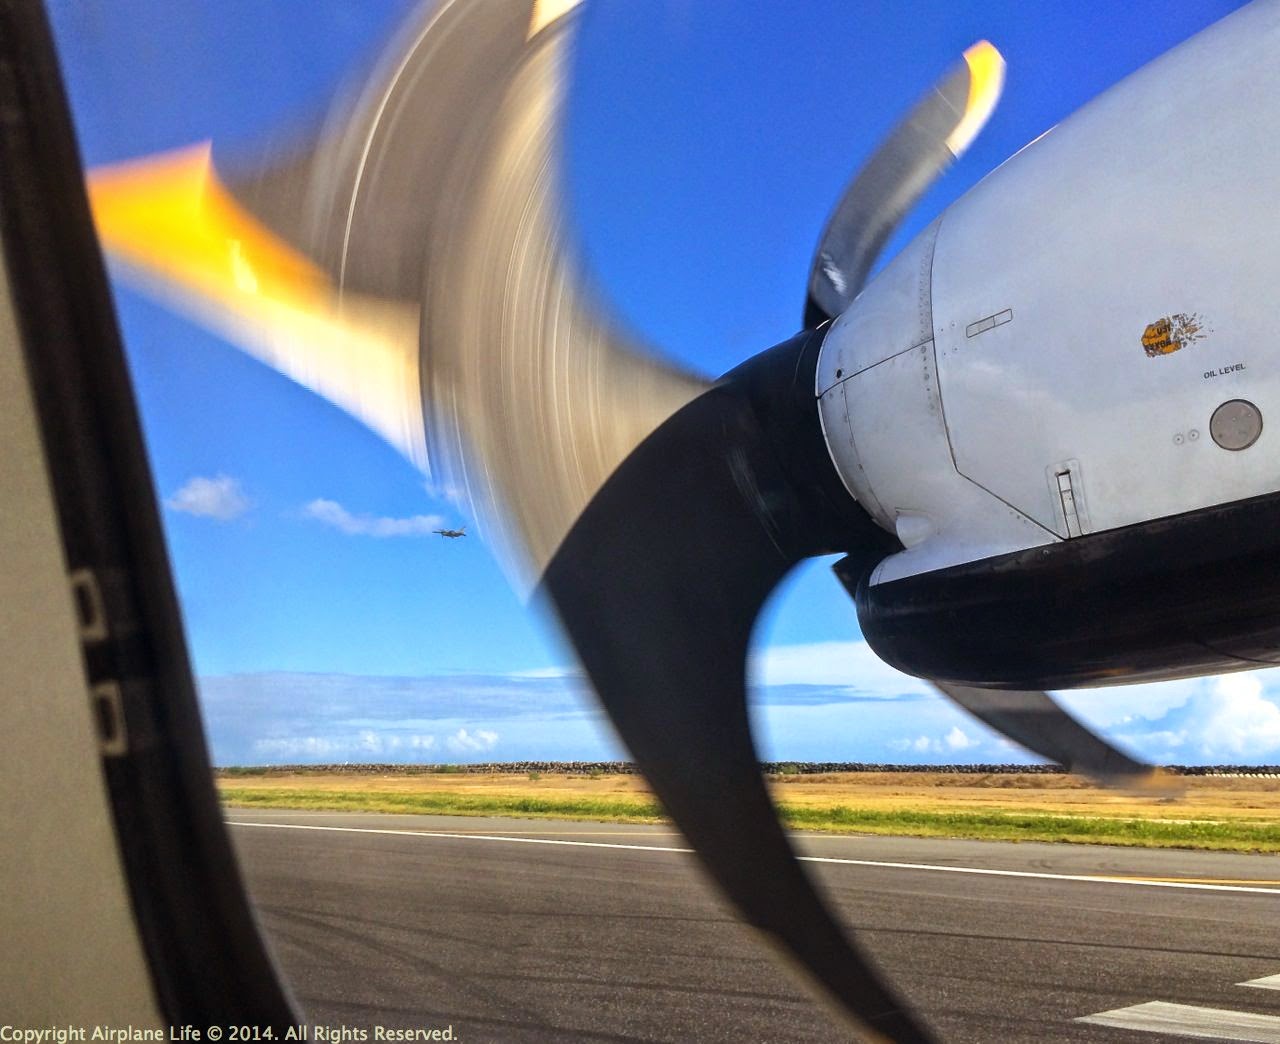 Airplane Life: Advanced Propeller Design